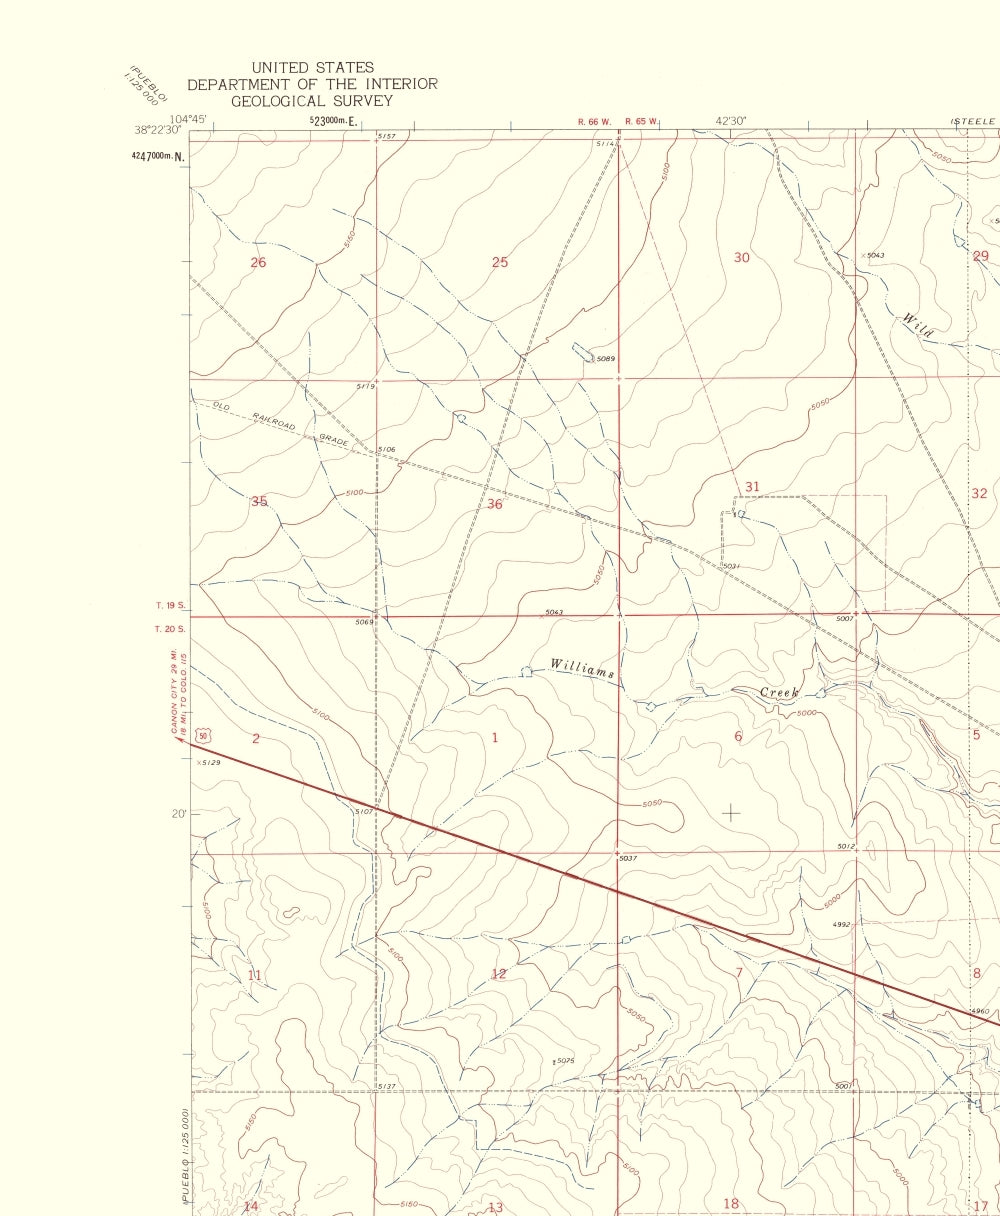 Topographical Map - Pueblo Colorado Northwest Quad - USGS 1962 - 23 x 27.98 - Vintage Wall Art